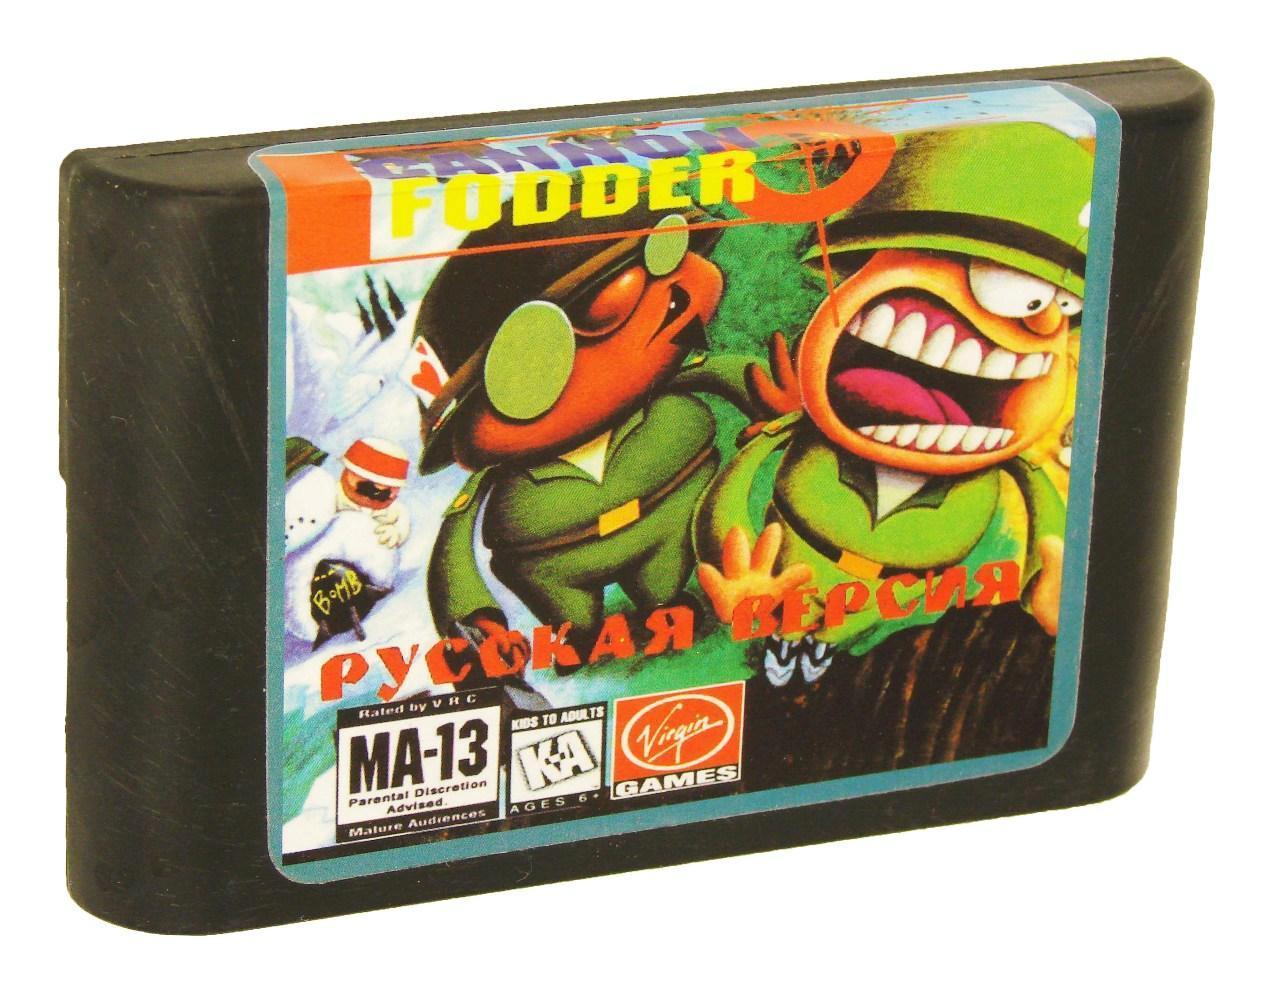 Cannon Fodder (Sega)